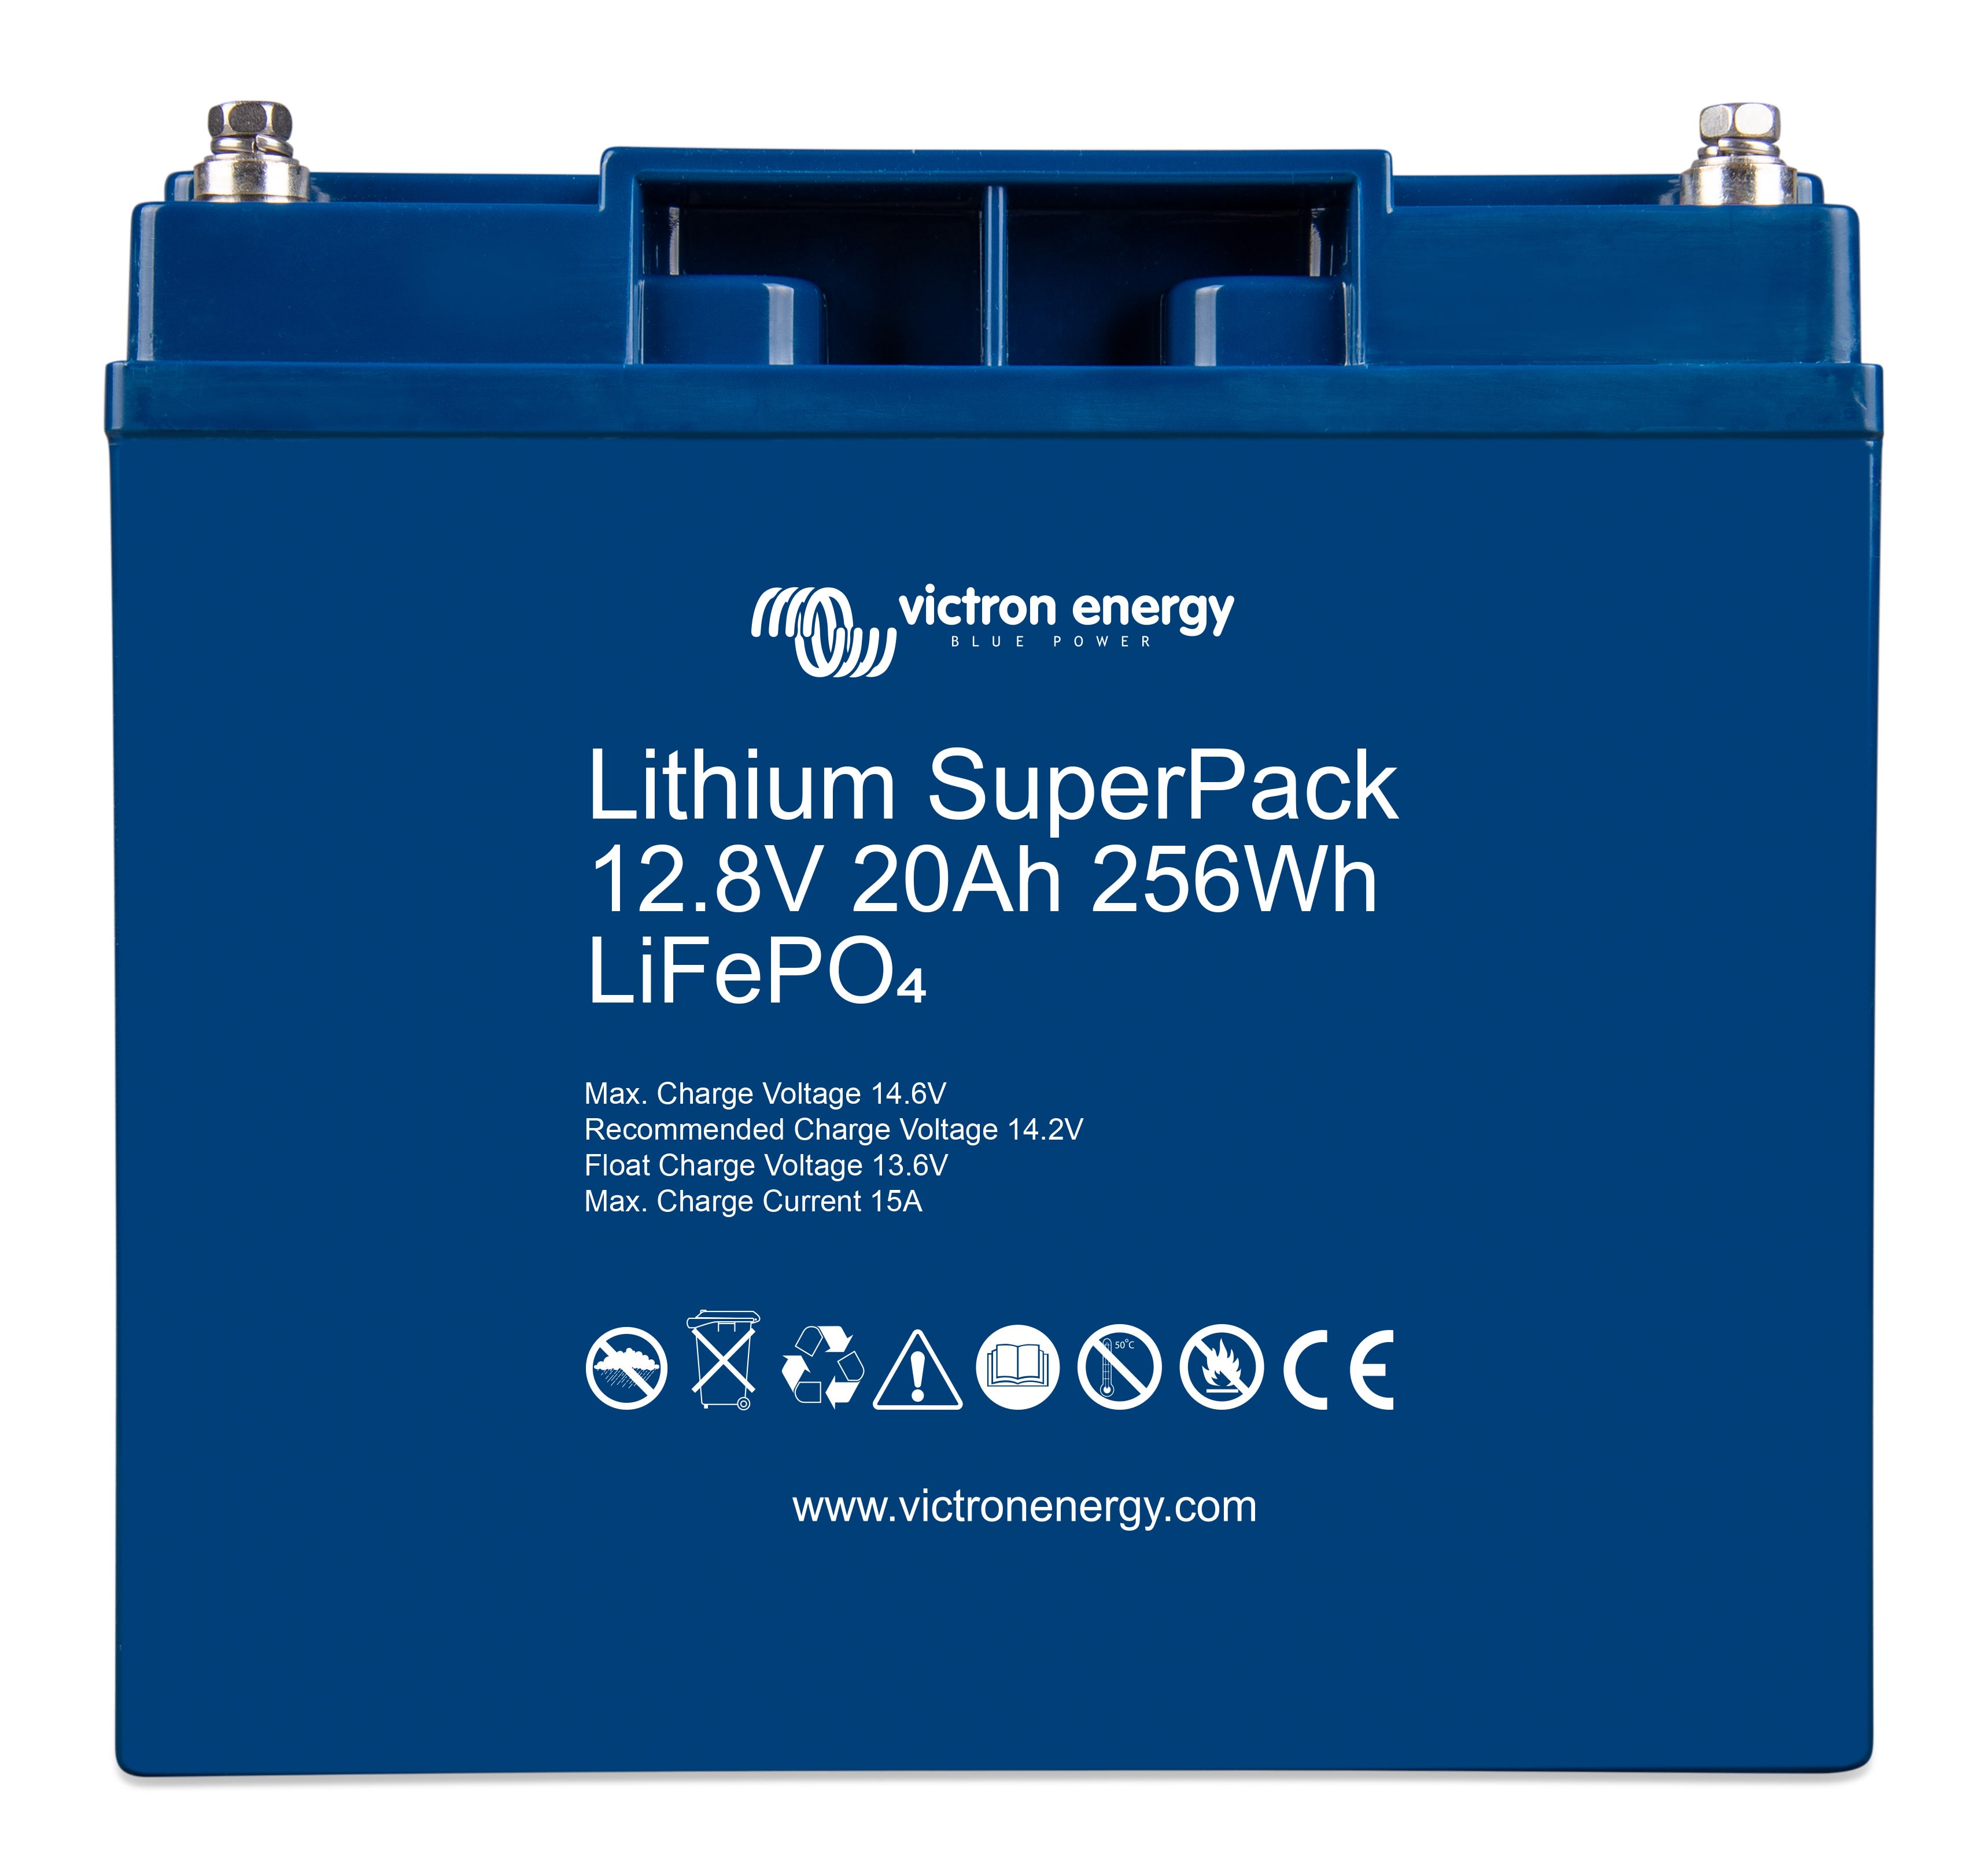 Lithium_SuperPack_12.8V_20Ah_256Wh_-front-.jpg?ts=1704848934043